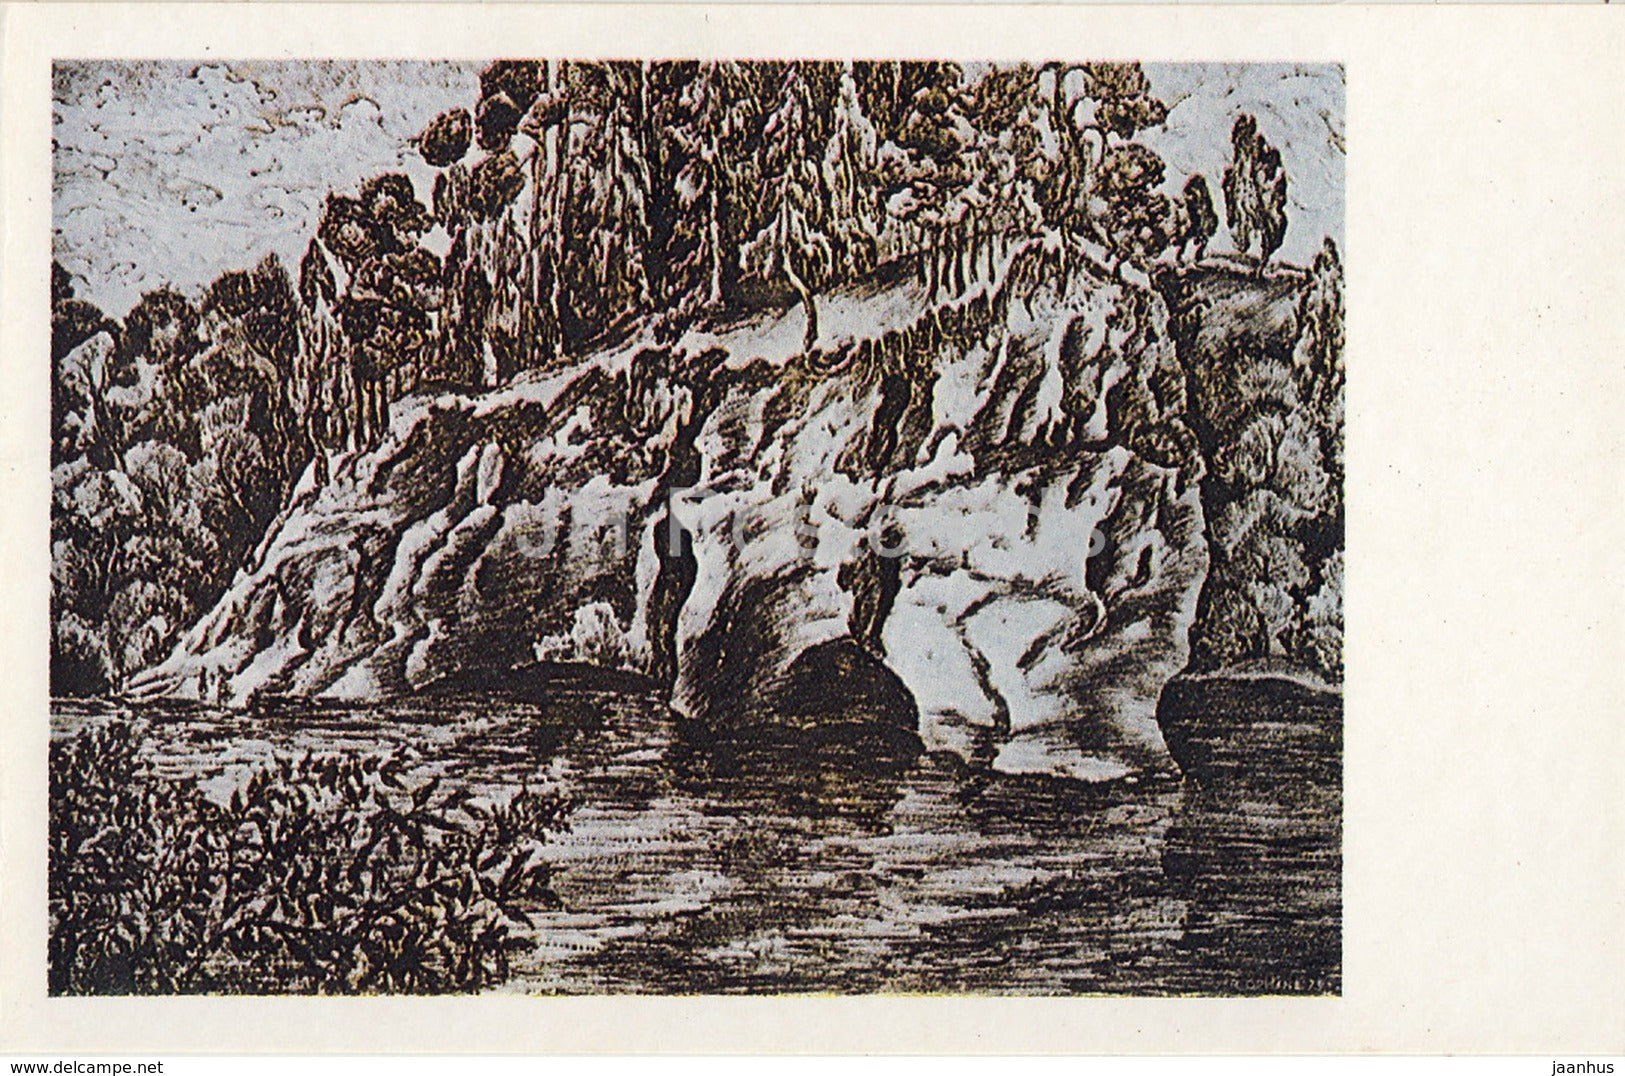 Lithography by R. Opmane - The Gudu Rock (Devonian) - latvian art - Gauja National Park - 1982 - Latvia USSR - unused - JH Postcards